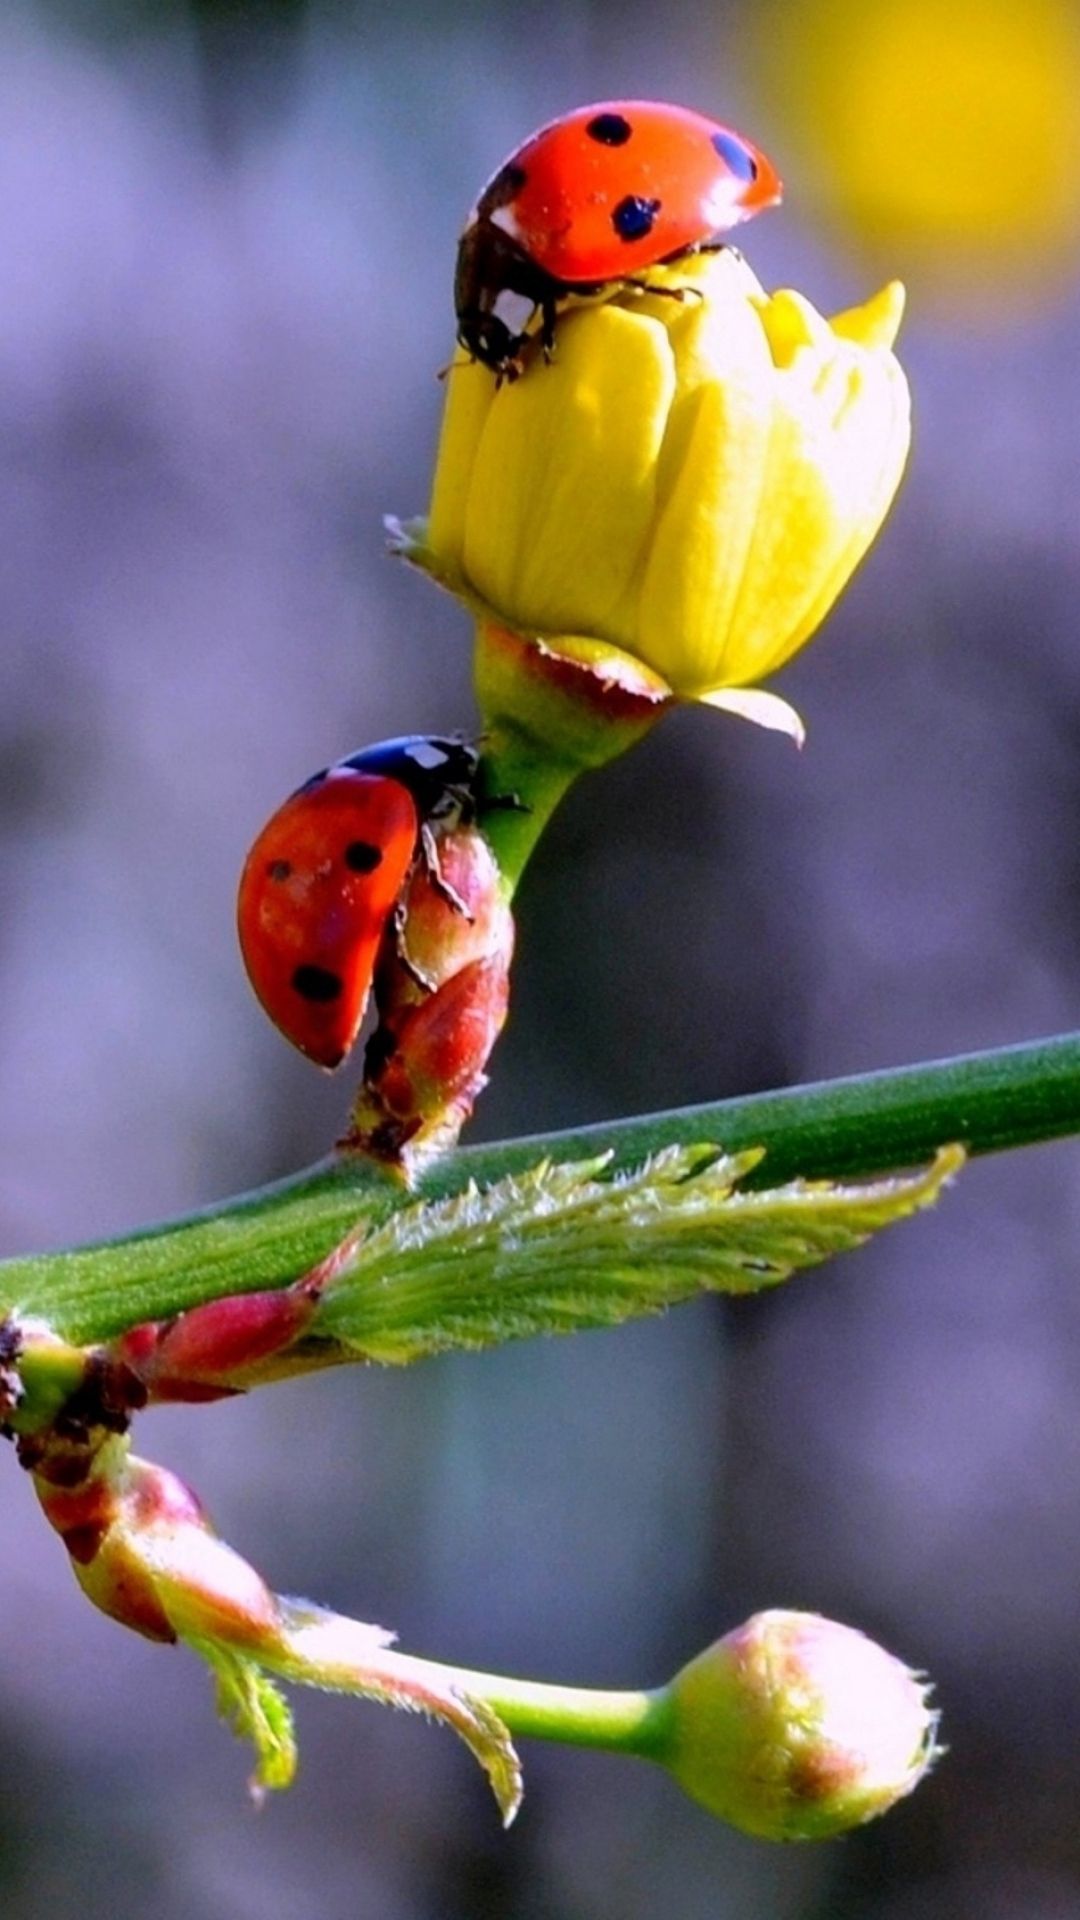 sylviayork. Ladybug, Spring wallpaper, Beautiful bugs